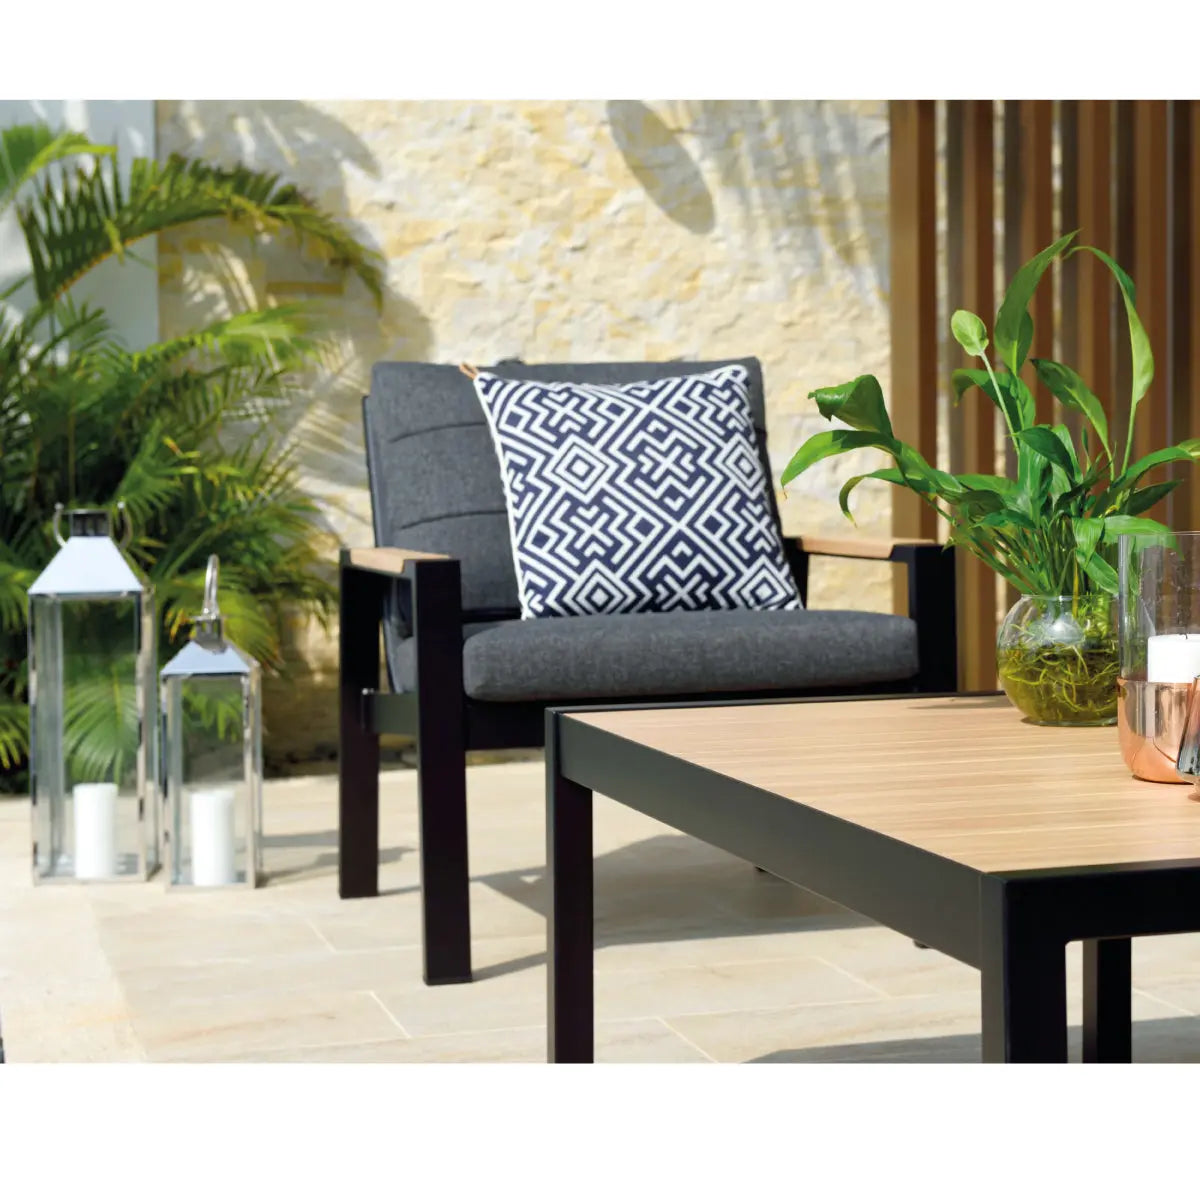 Panama lounge chair Desert River Rentals